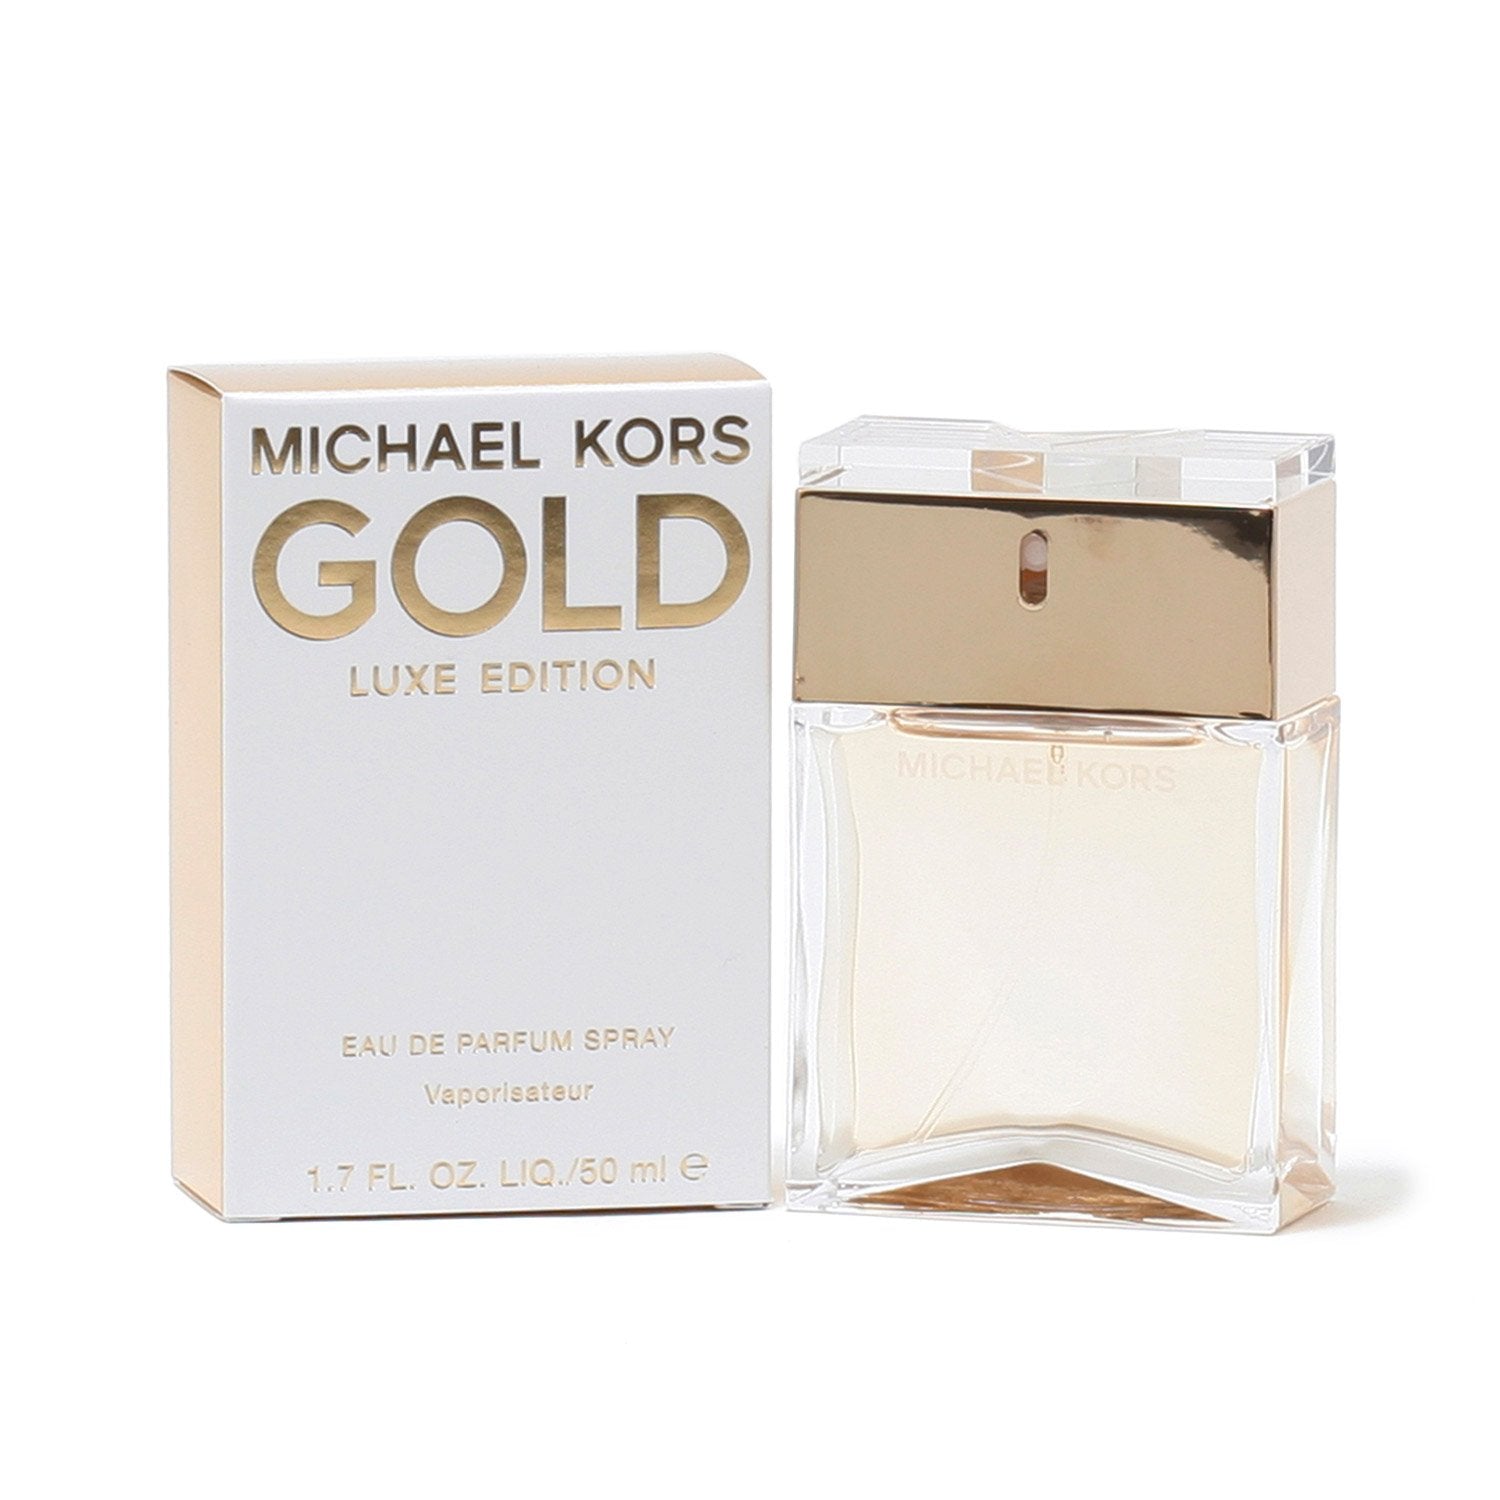 Perfume - MICHAEL KORS GOLD LUXE EDITION FOR WOMEN - EAU DE PARFUM SPRAY